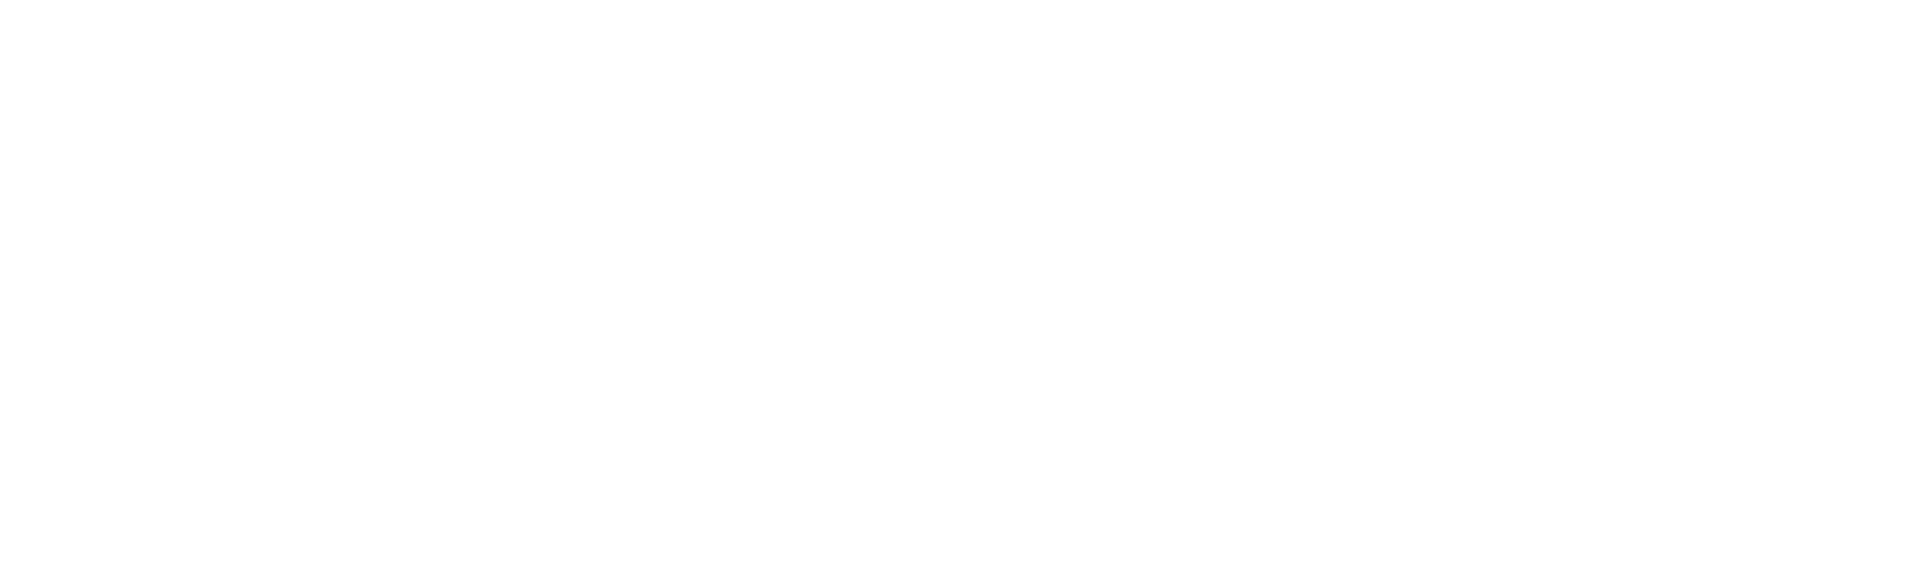 Bedrock_Learning_Main_Logo_Reverse_RGB_1920px@72ppi